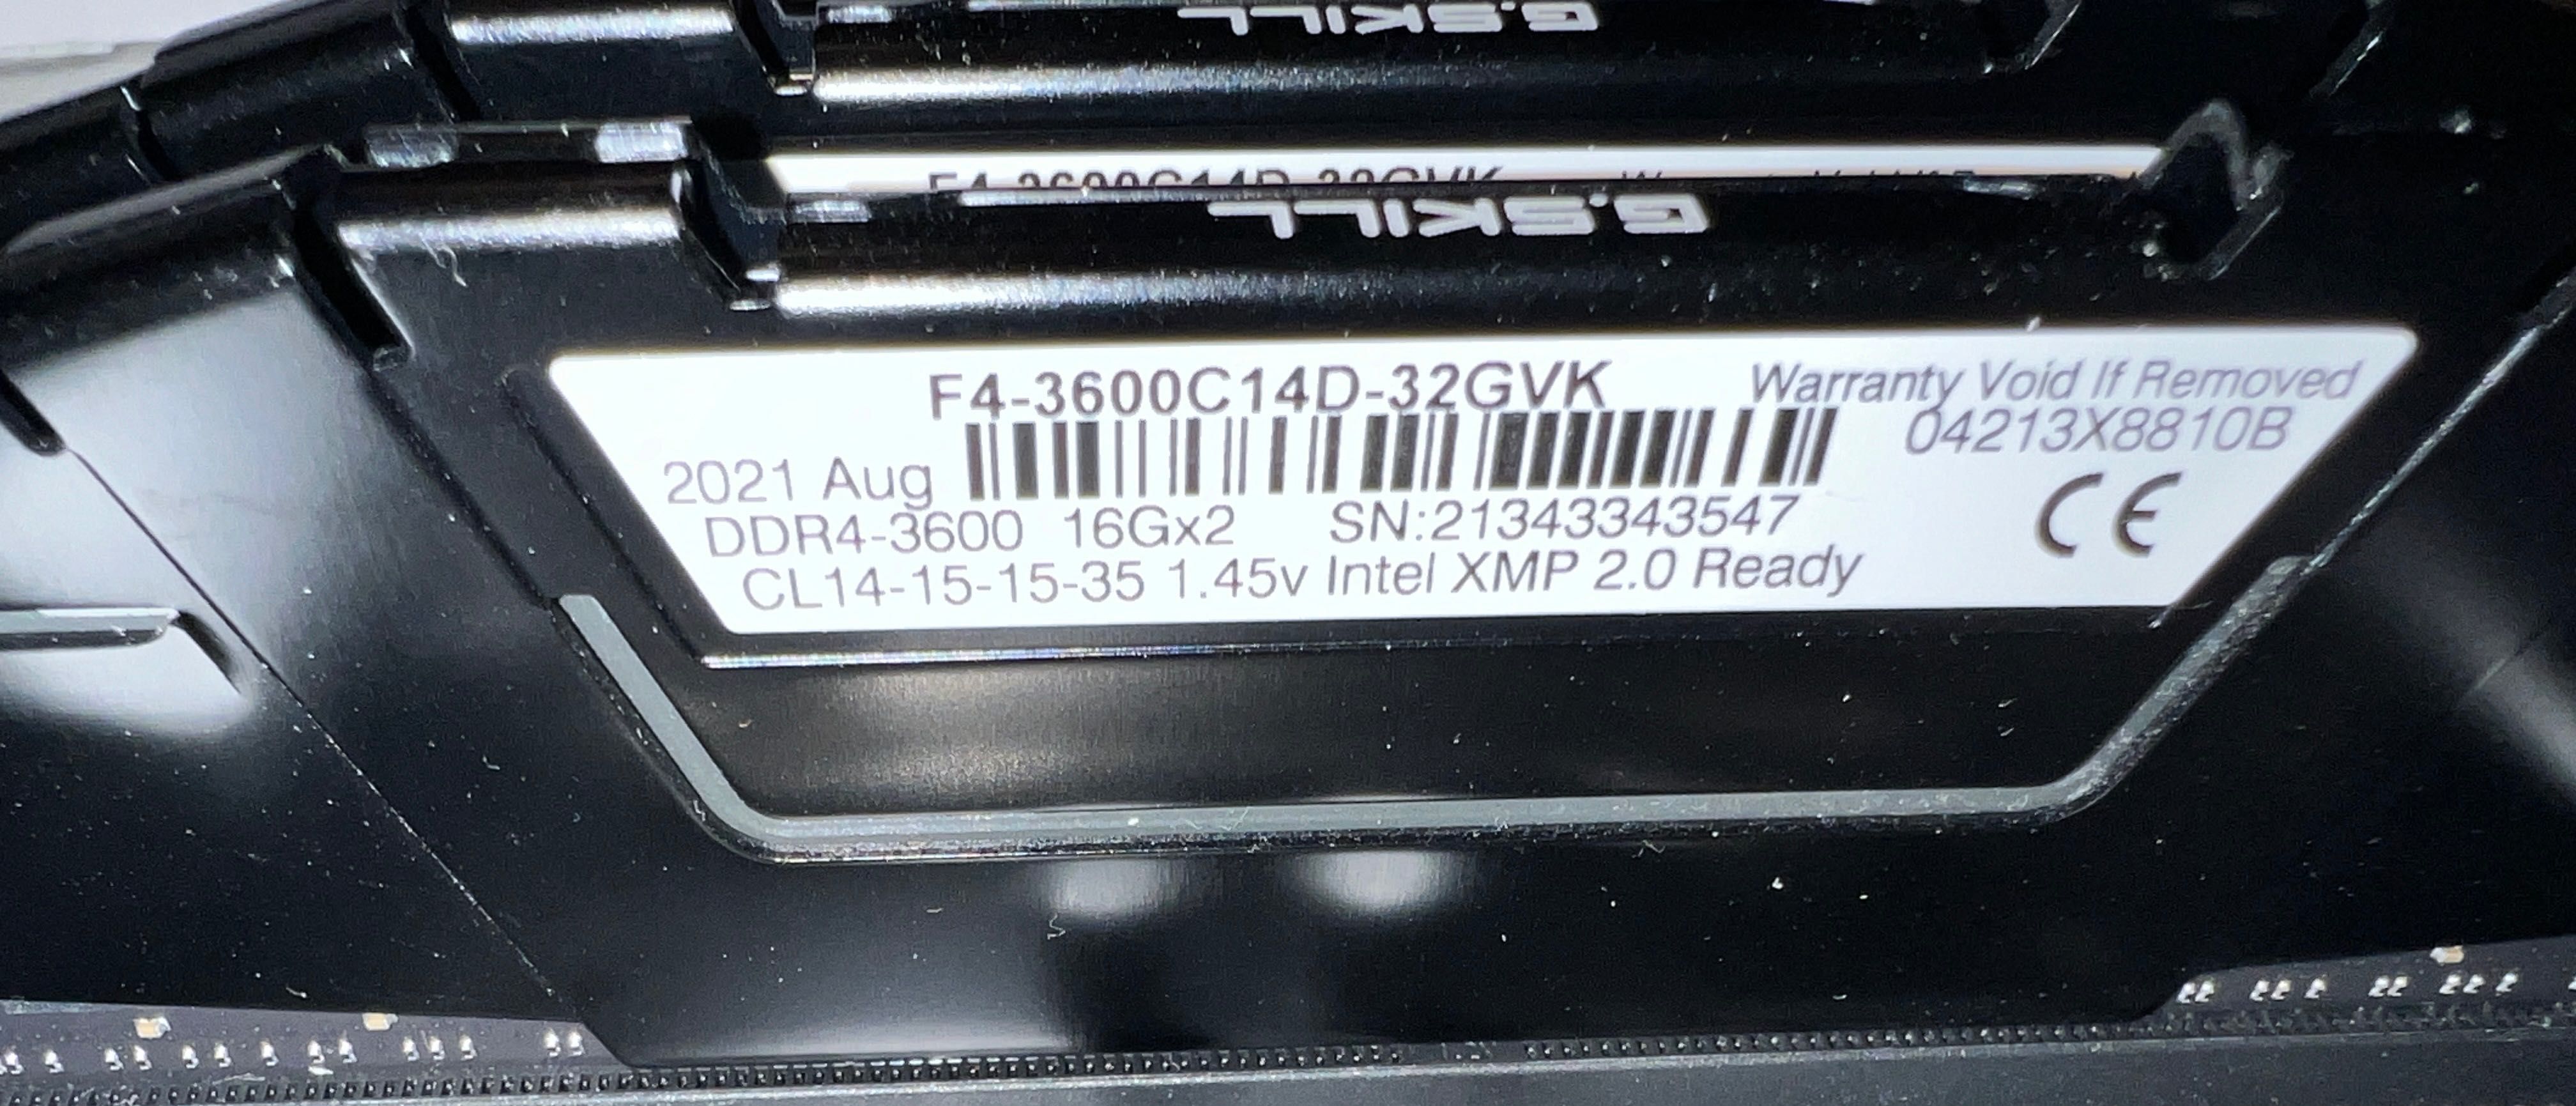 Pamięć RAM G.Skill Ripjaws v 2x16GB DDR4-3600 CL14